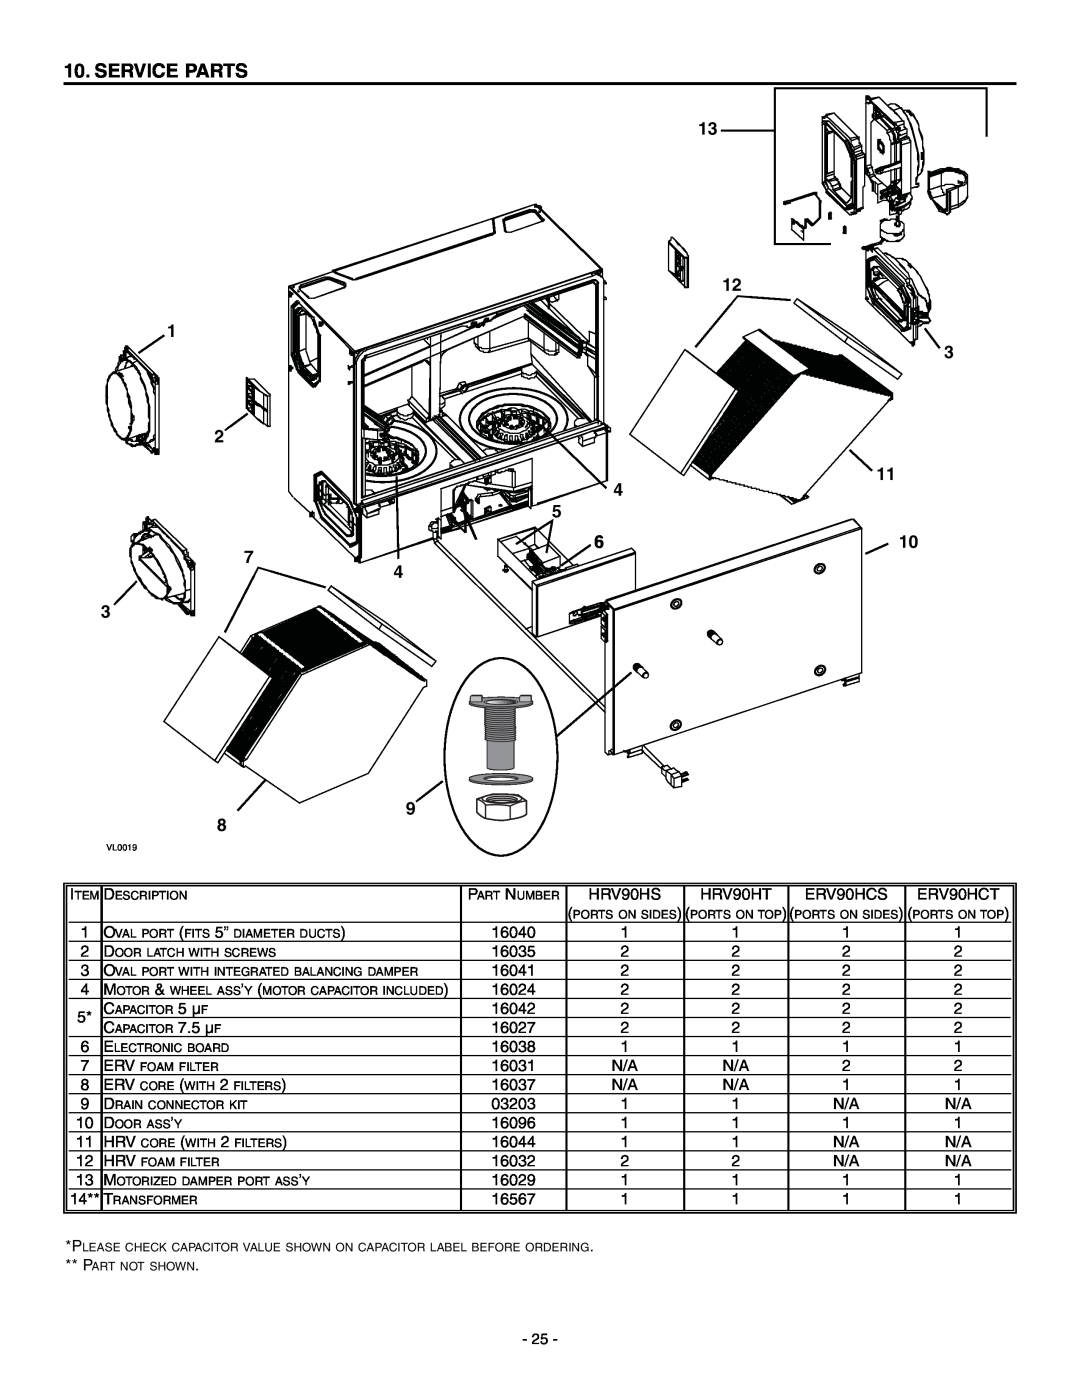 Broan ERV90HCS, HRV90HS installation instructions Service Parts, 13 12 3 11, 7 4 